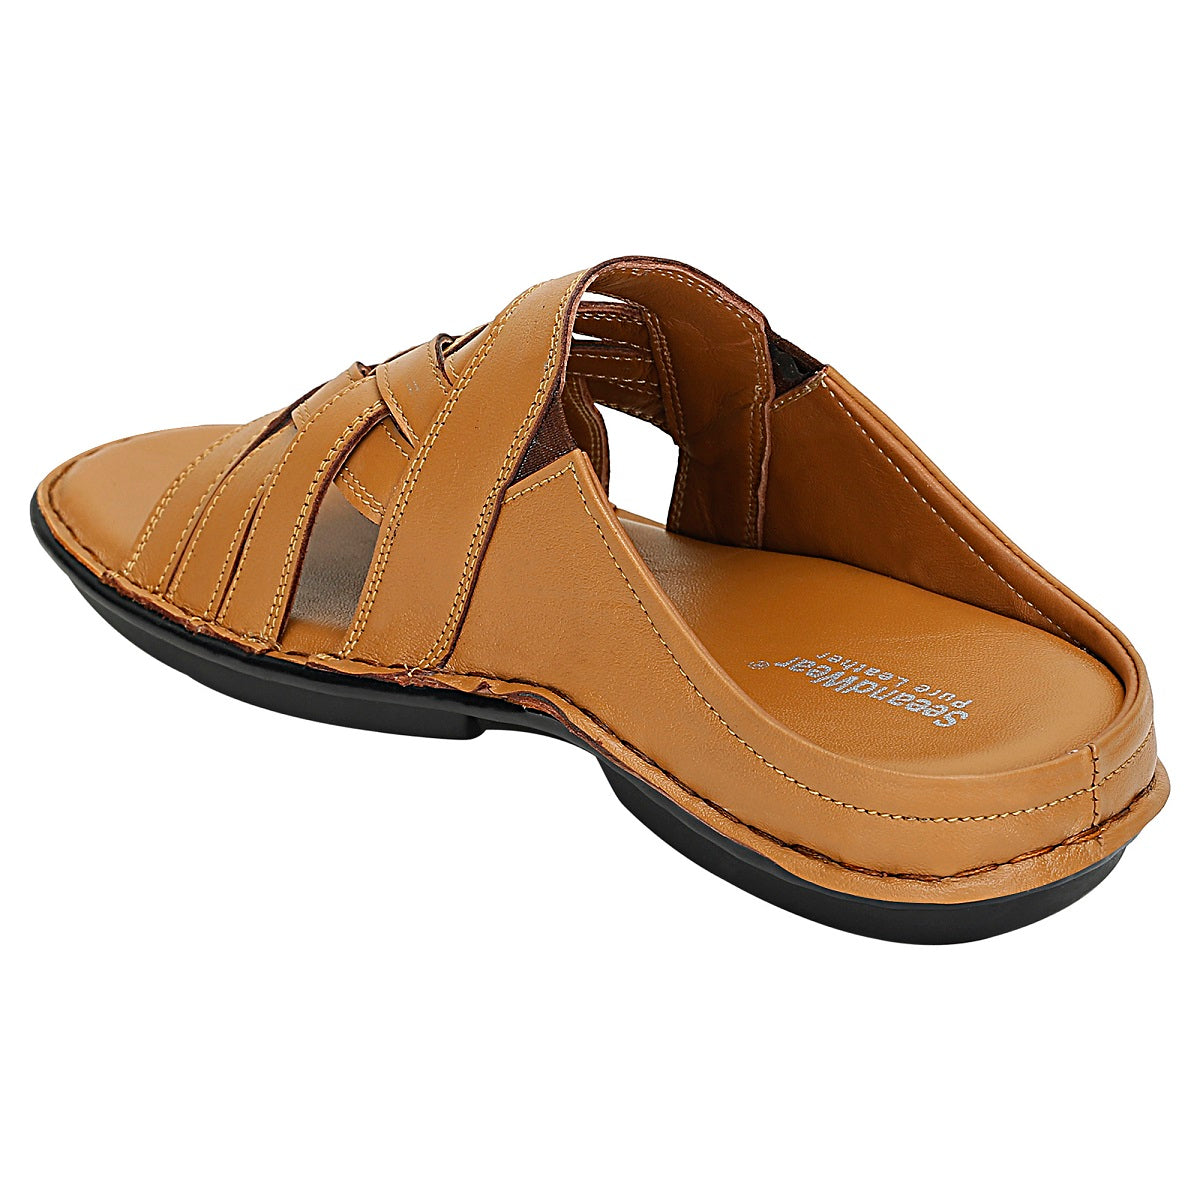 SeeandWear Men Leather Tan Sandal